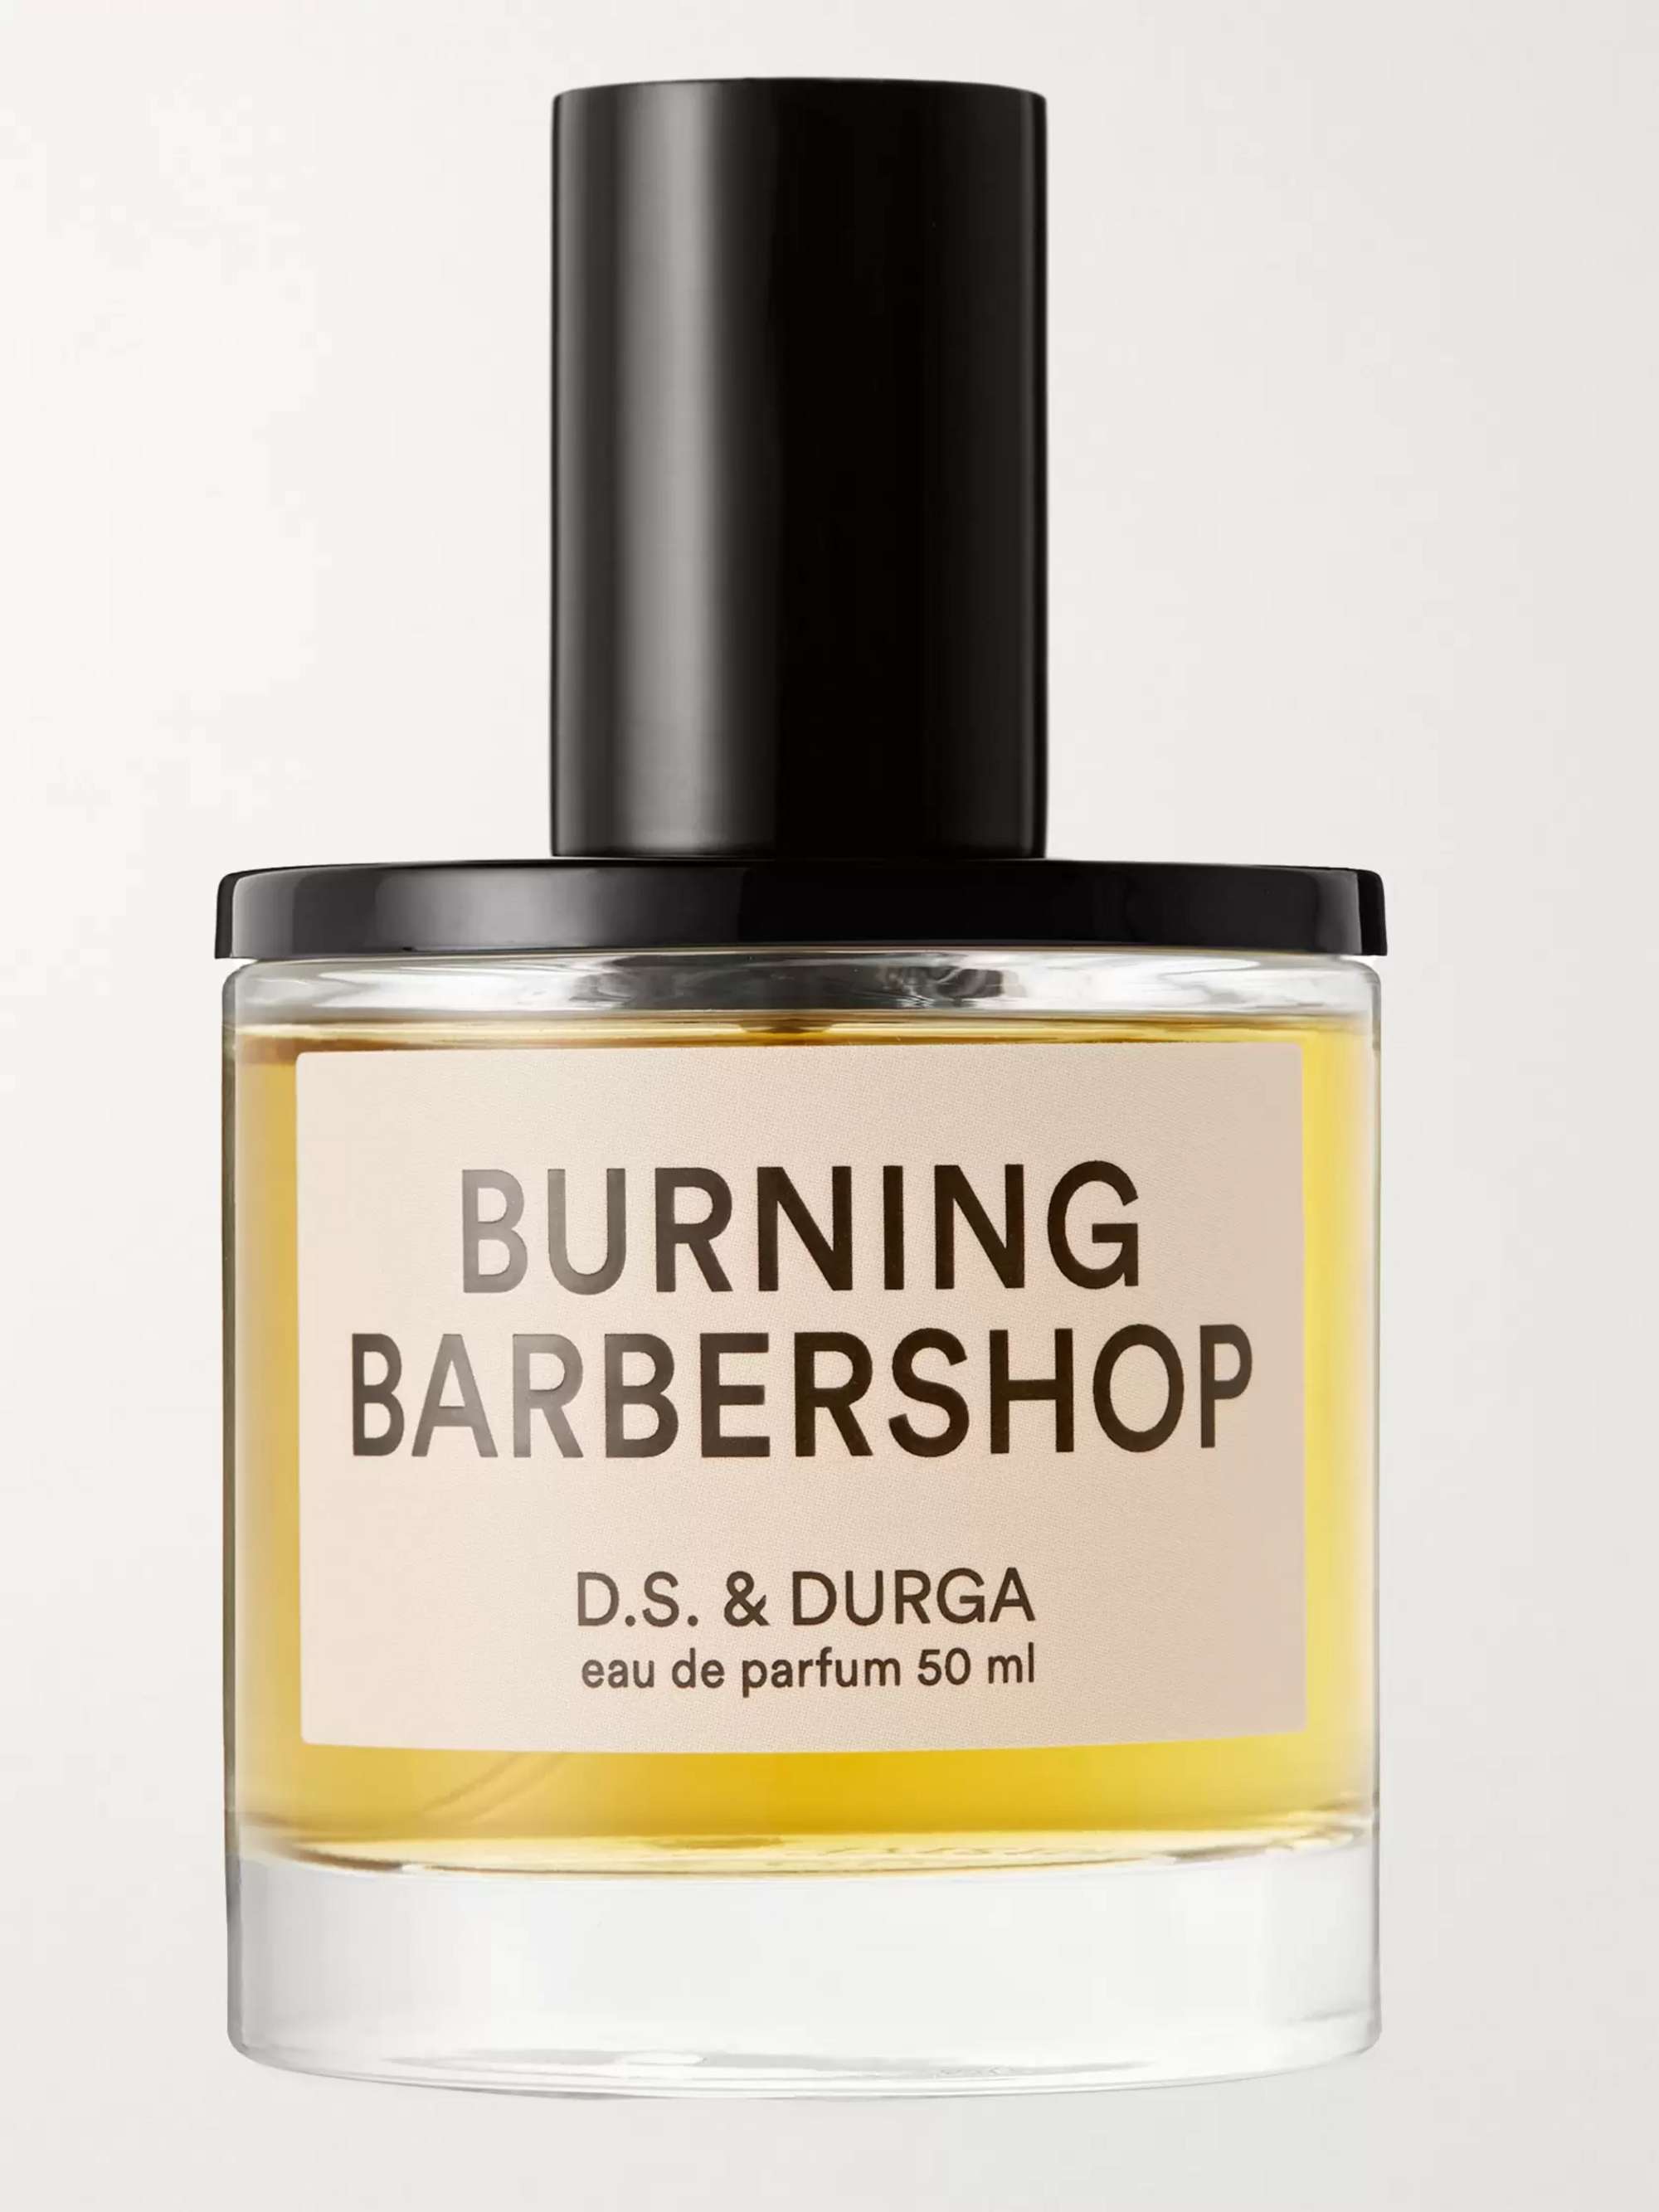 D.S. & DURGA Eau de Parfum - Burning Barbershop, 50ml